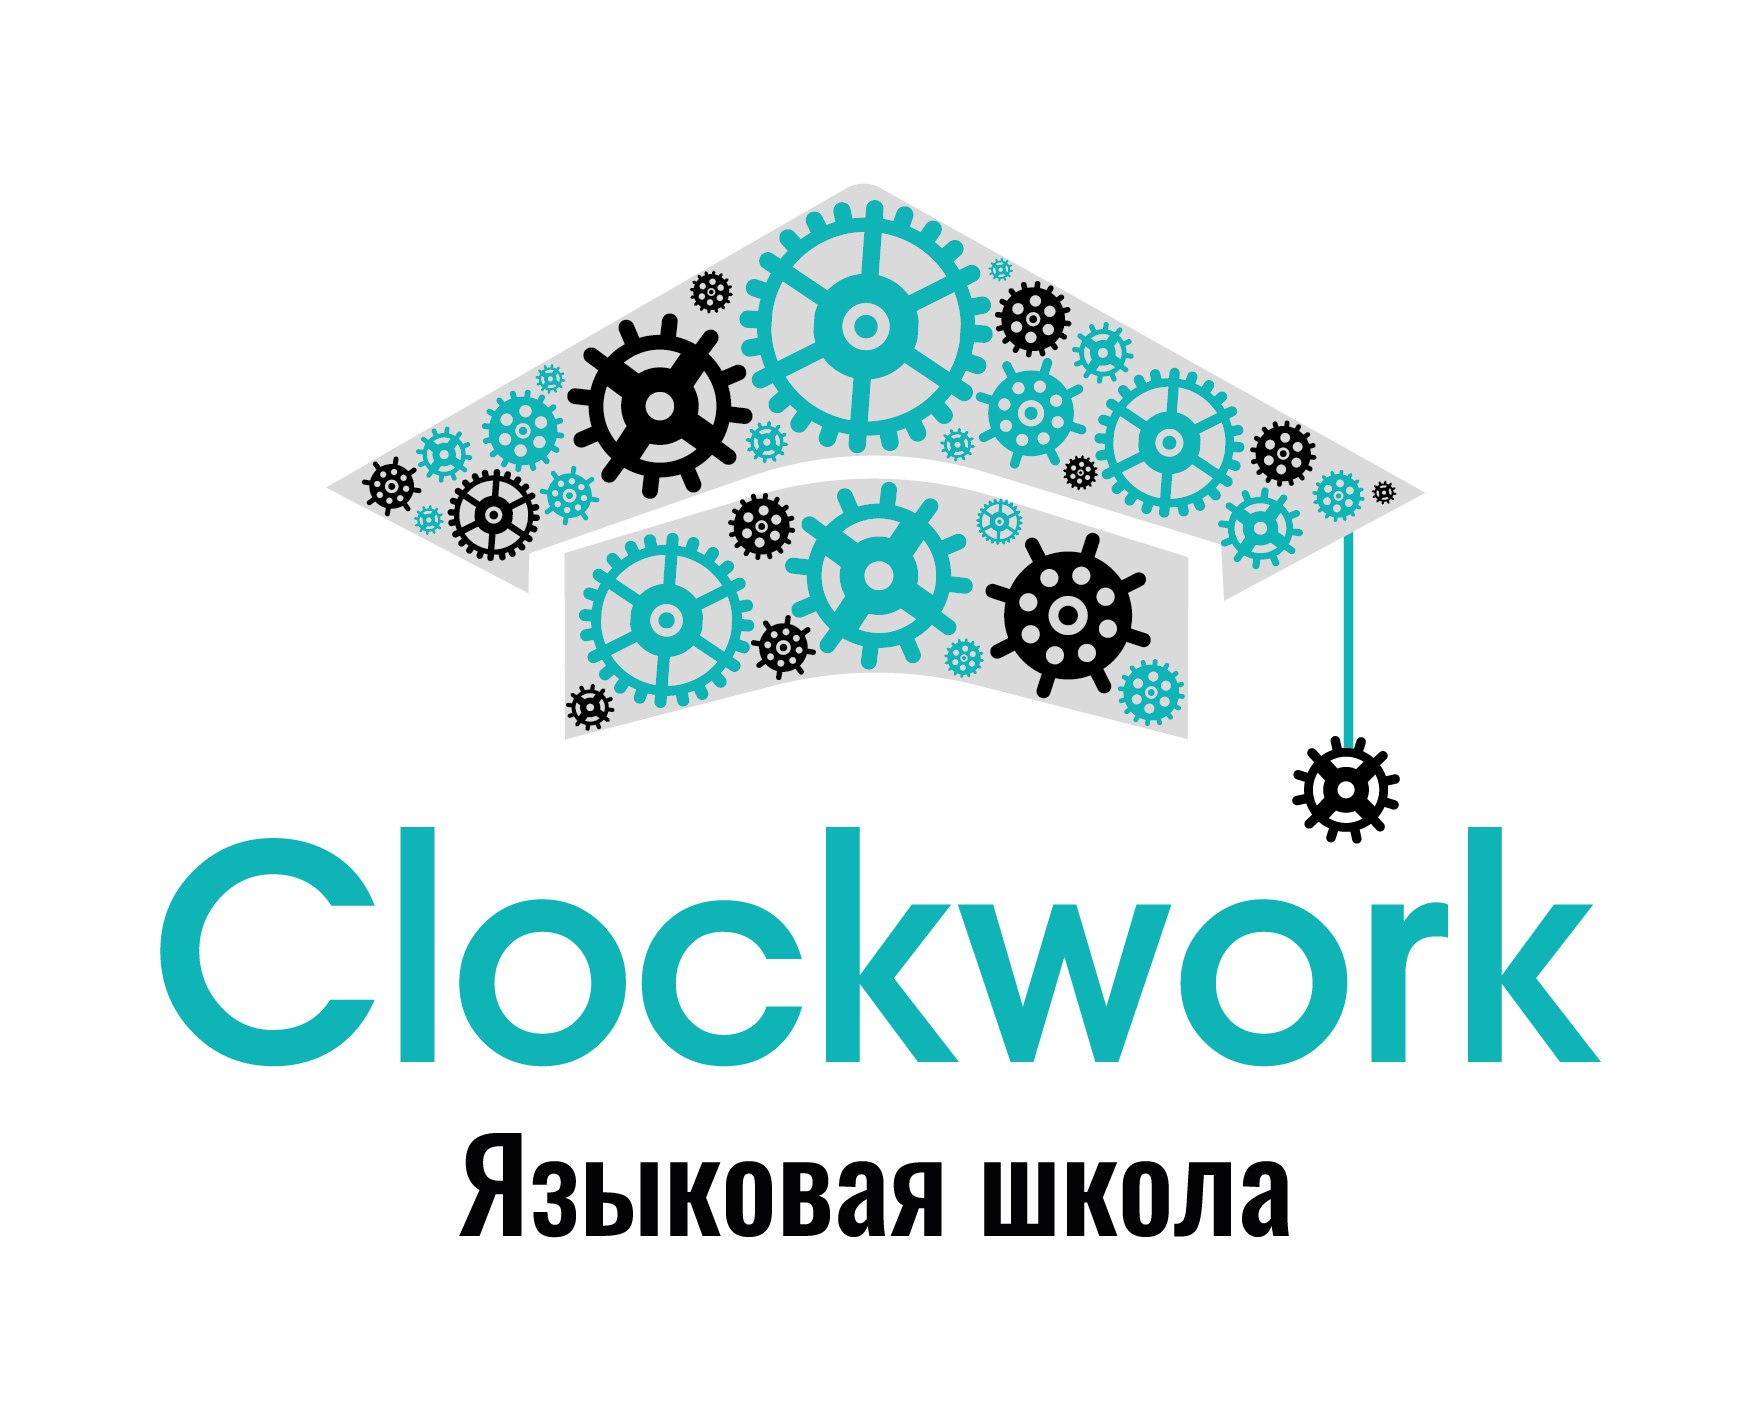 Clockwork